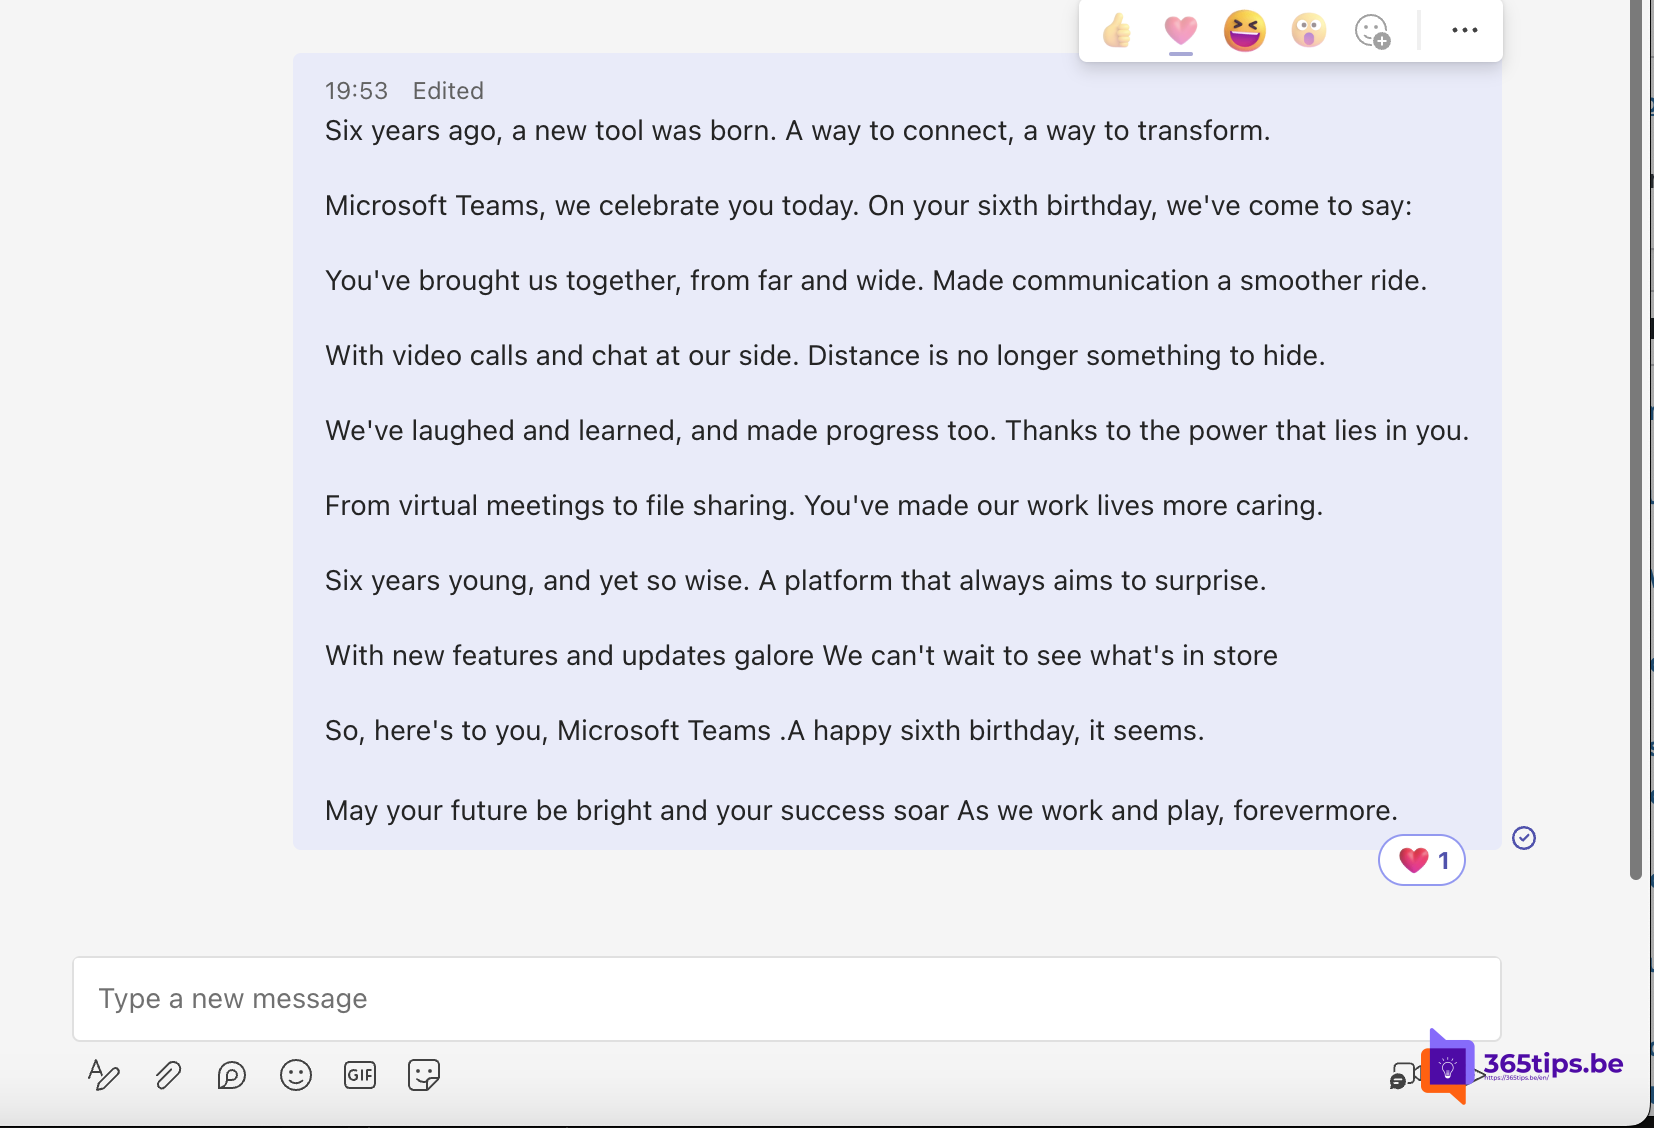 ¡Feliz 6º cumpleaños, Microsoft Teams! 🎉 🎈